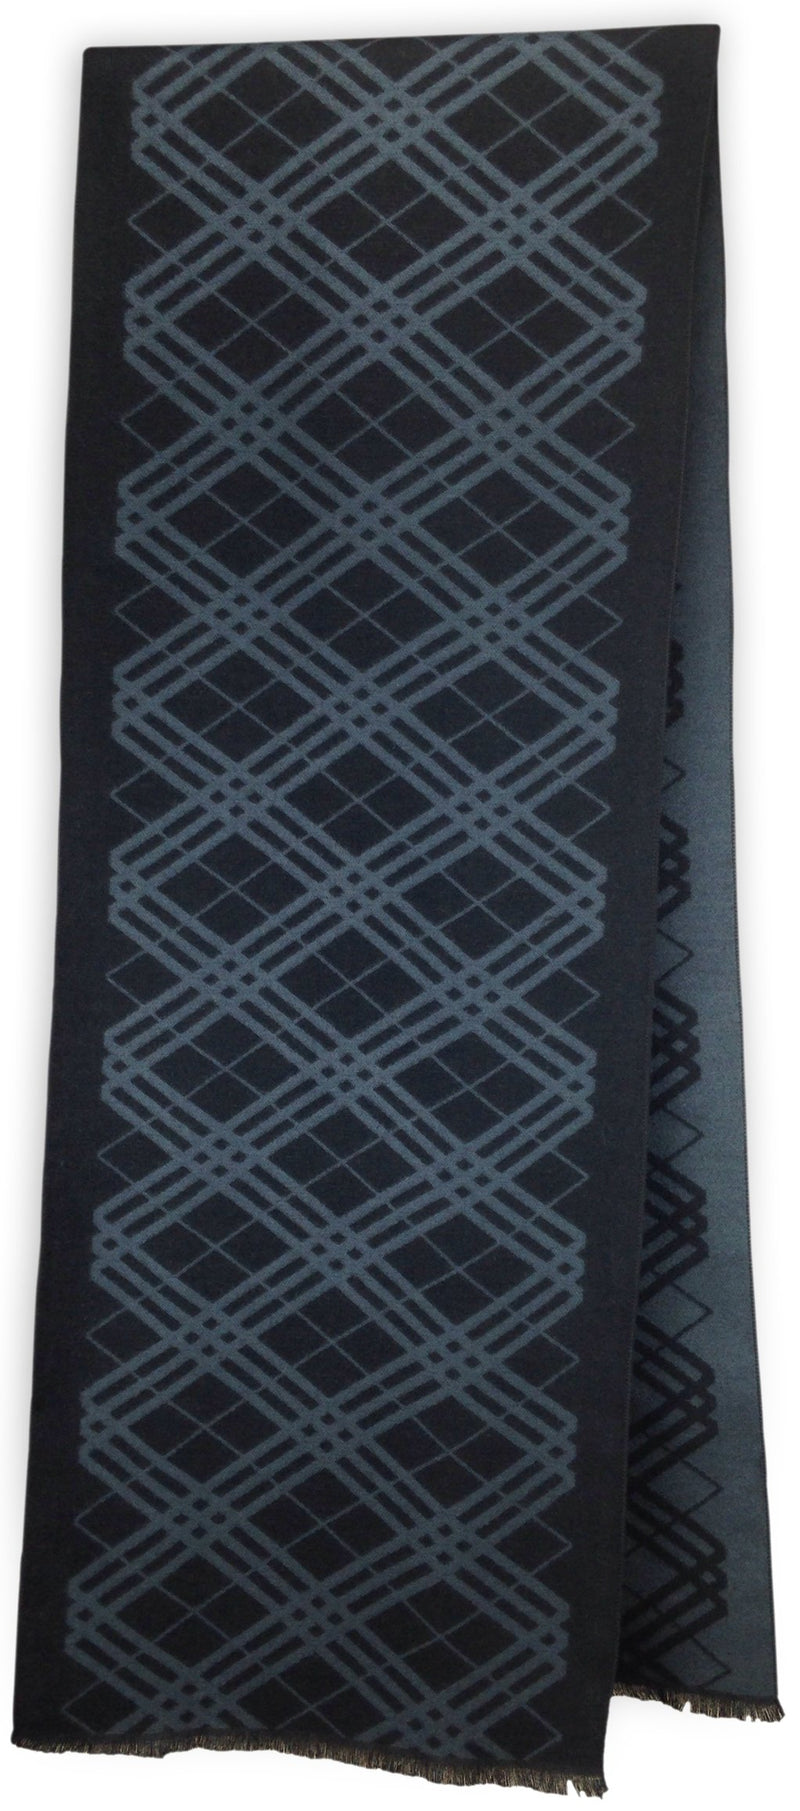 [Australia] - Bleu Nero Luxurious Winter Scarf Premium Cashmere Feel Unique Design Selection Black/Blue-grey Diagonal Plaid + Border 